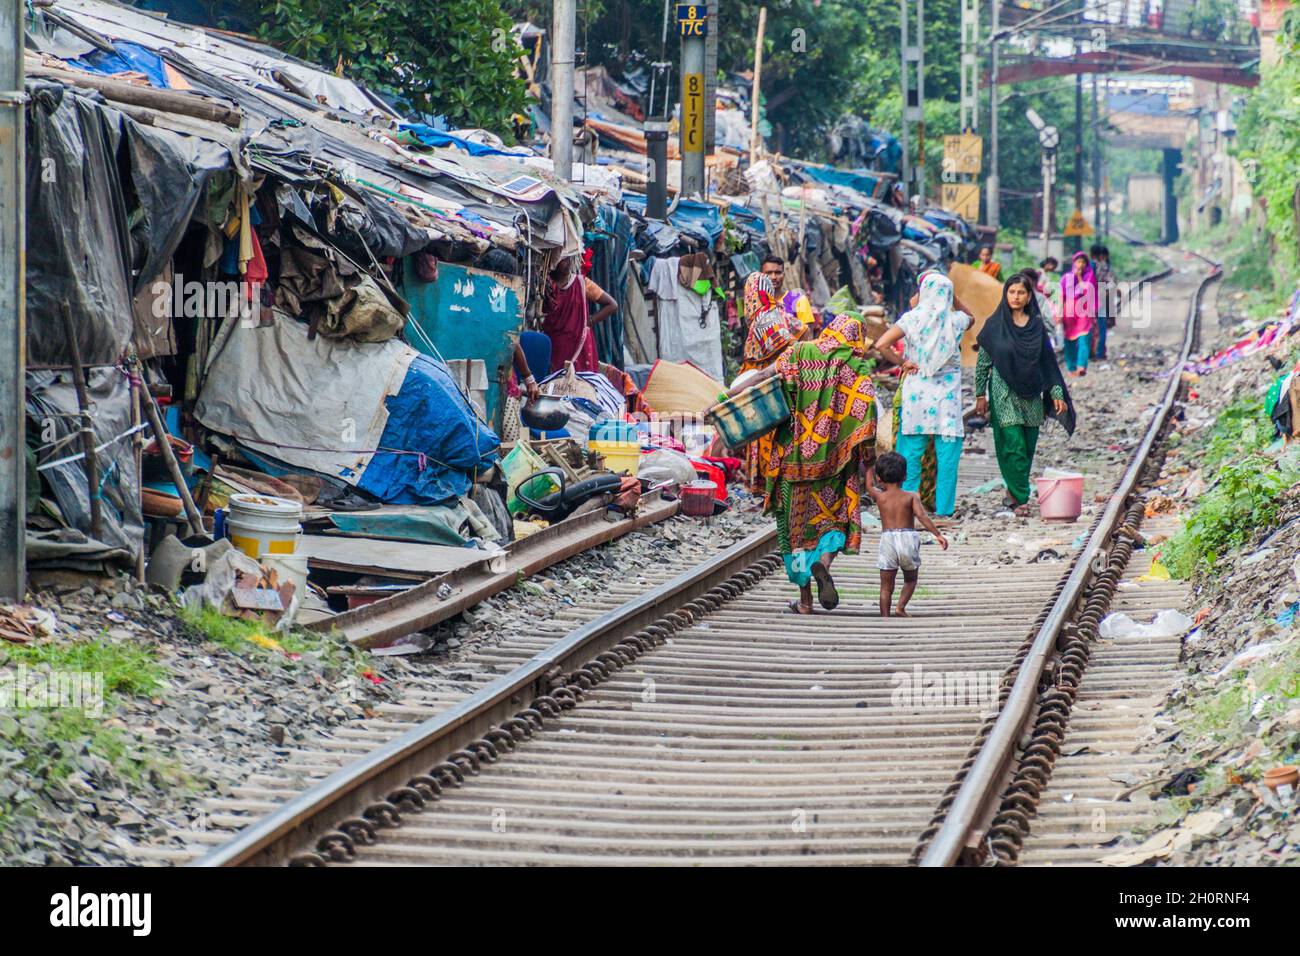 KOLKATA, INDIA - OCTOBER 31, 2016: Railway track and a slum in the center of Kolkata, India Stock Photo